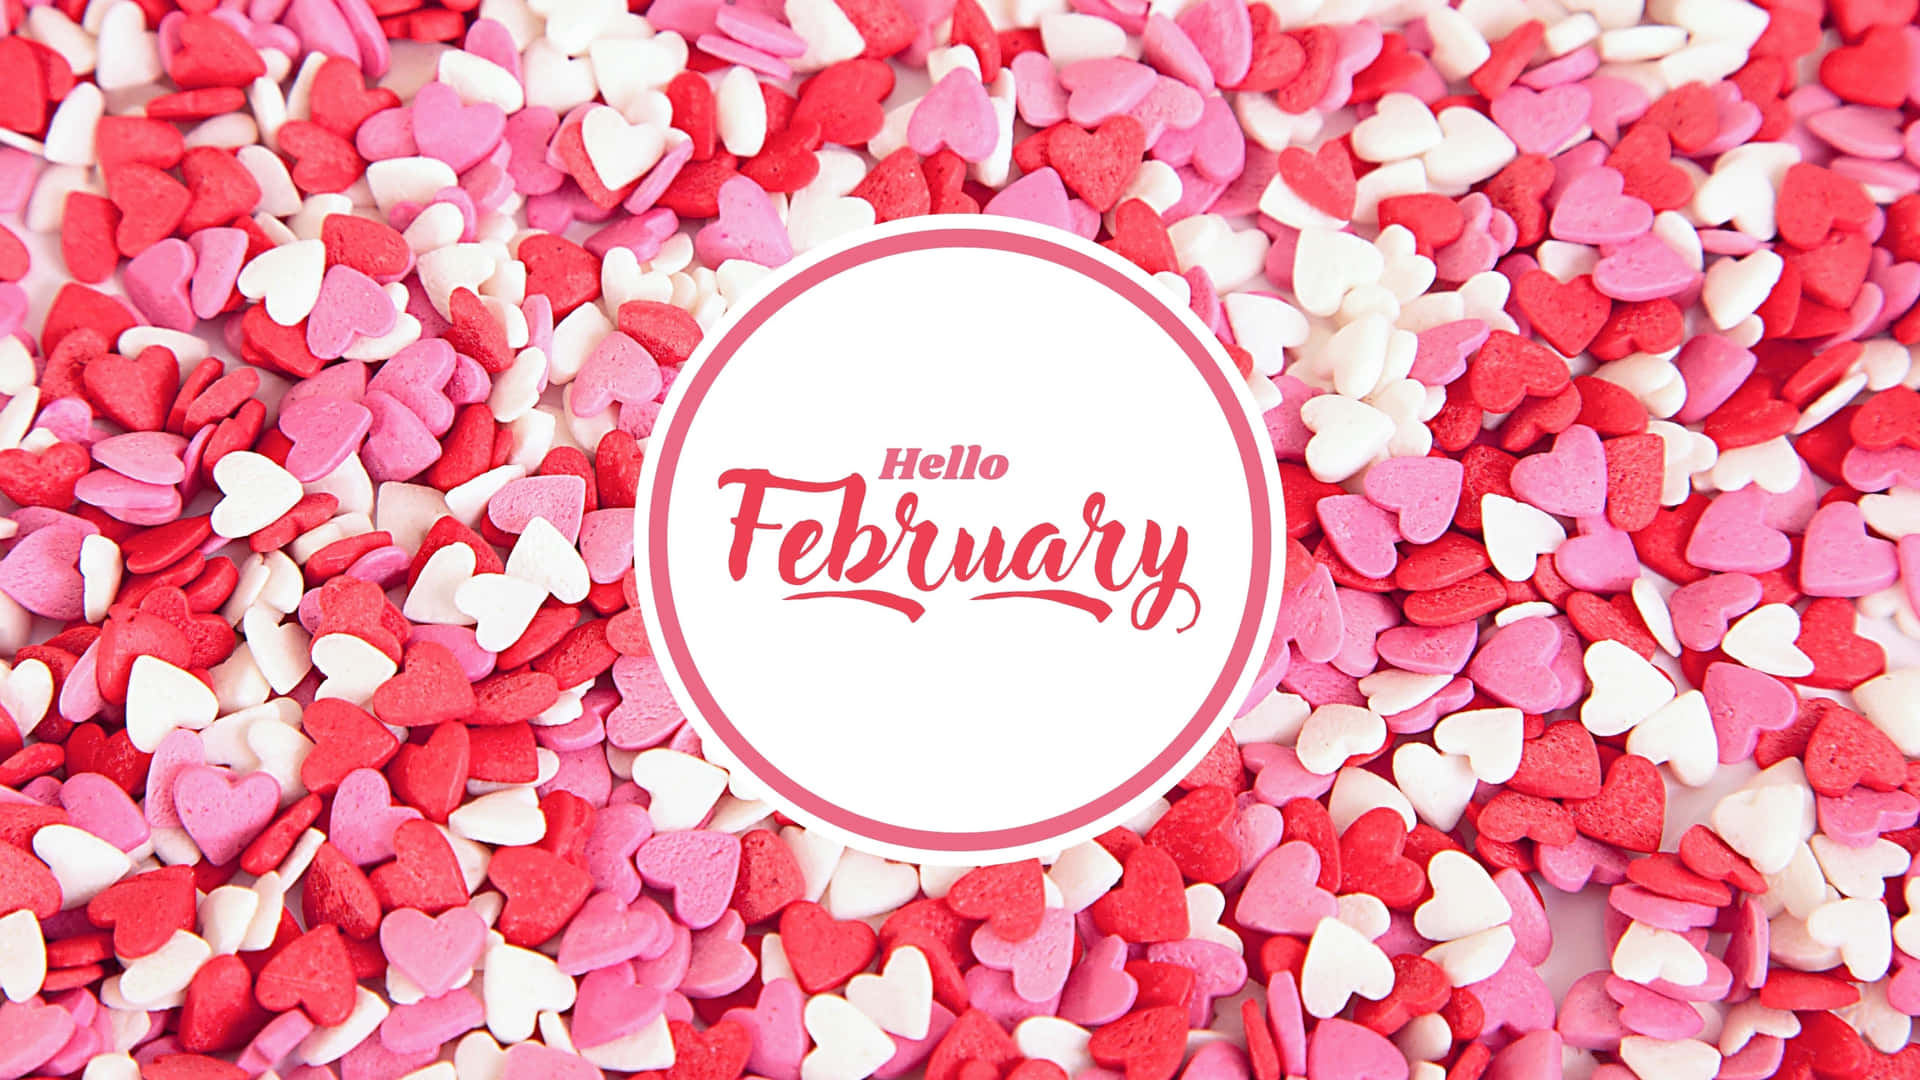 Hello February Hearts Background Wallpaper